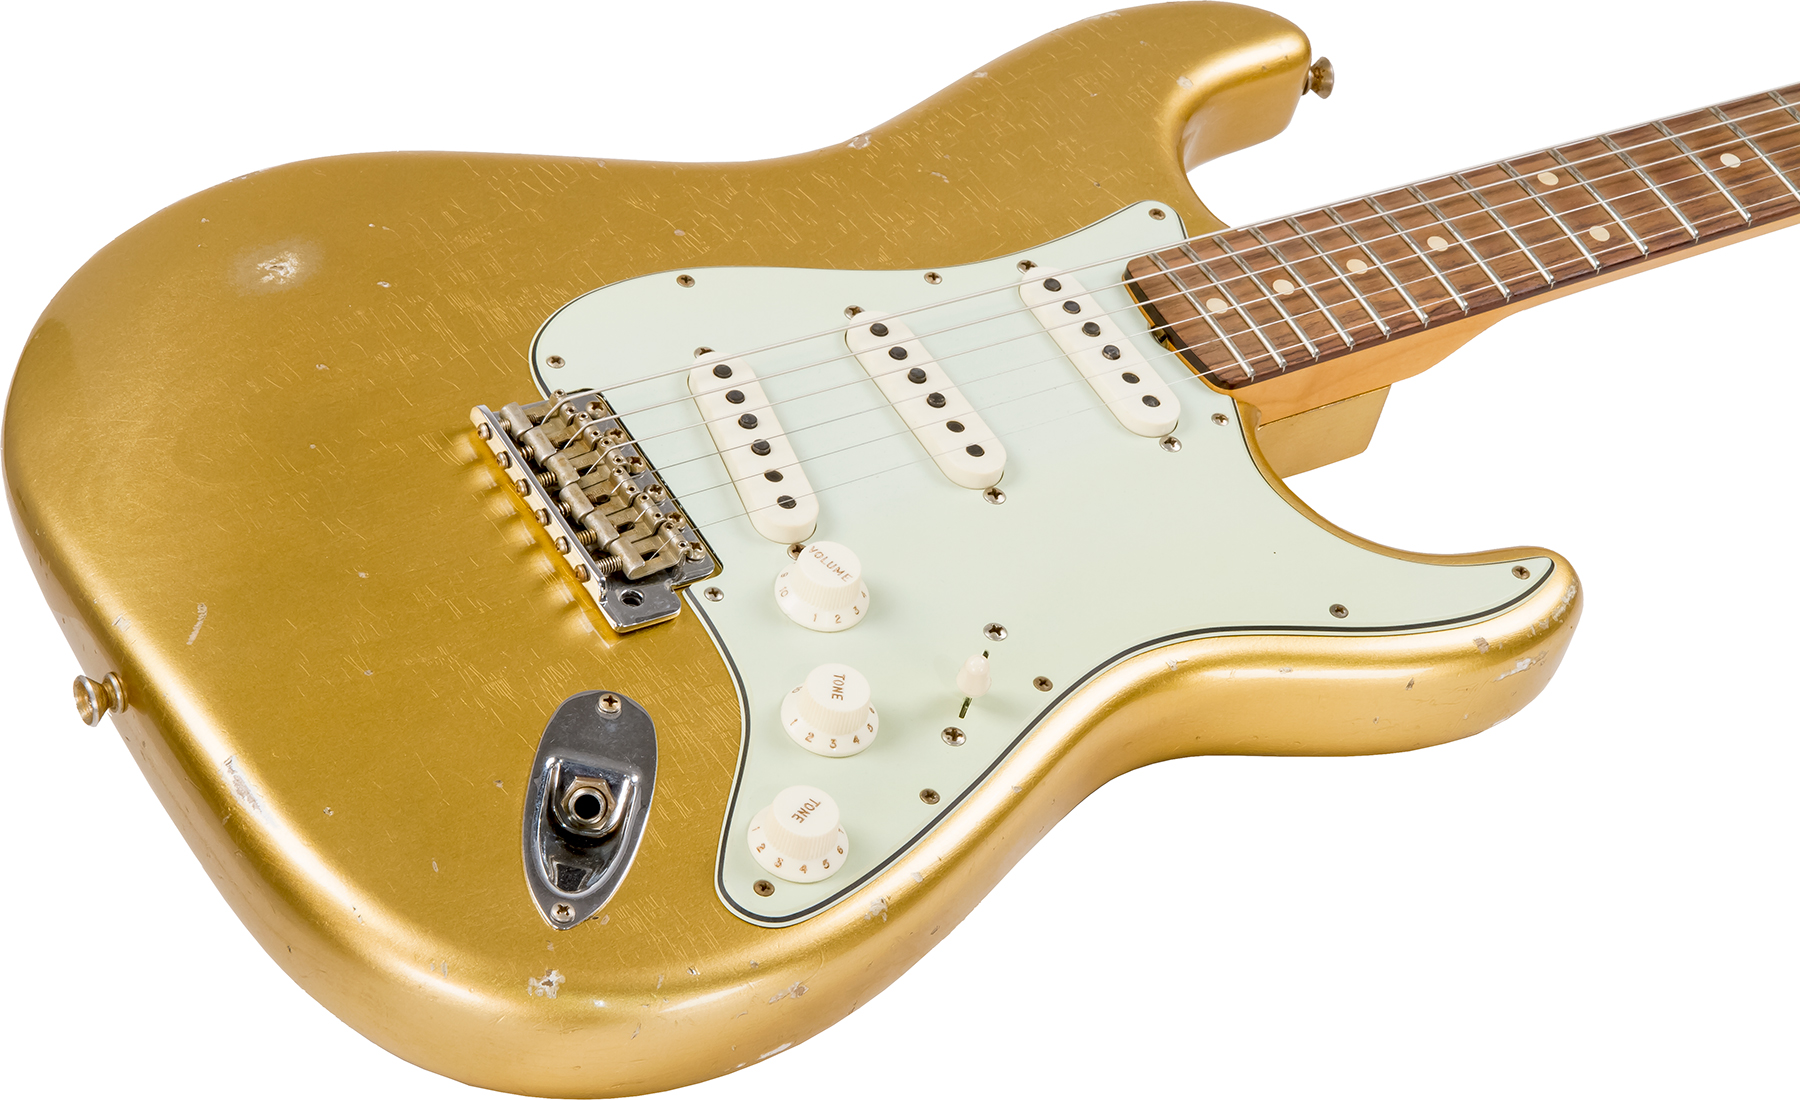 Fender Custom Shop Strat 1960 Rw #cz544406 - Relic Aztec Gold - Str shape electric guitar - Variation 2